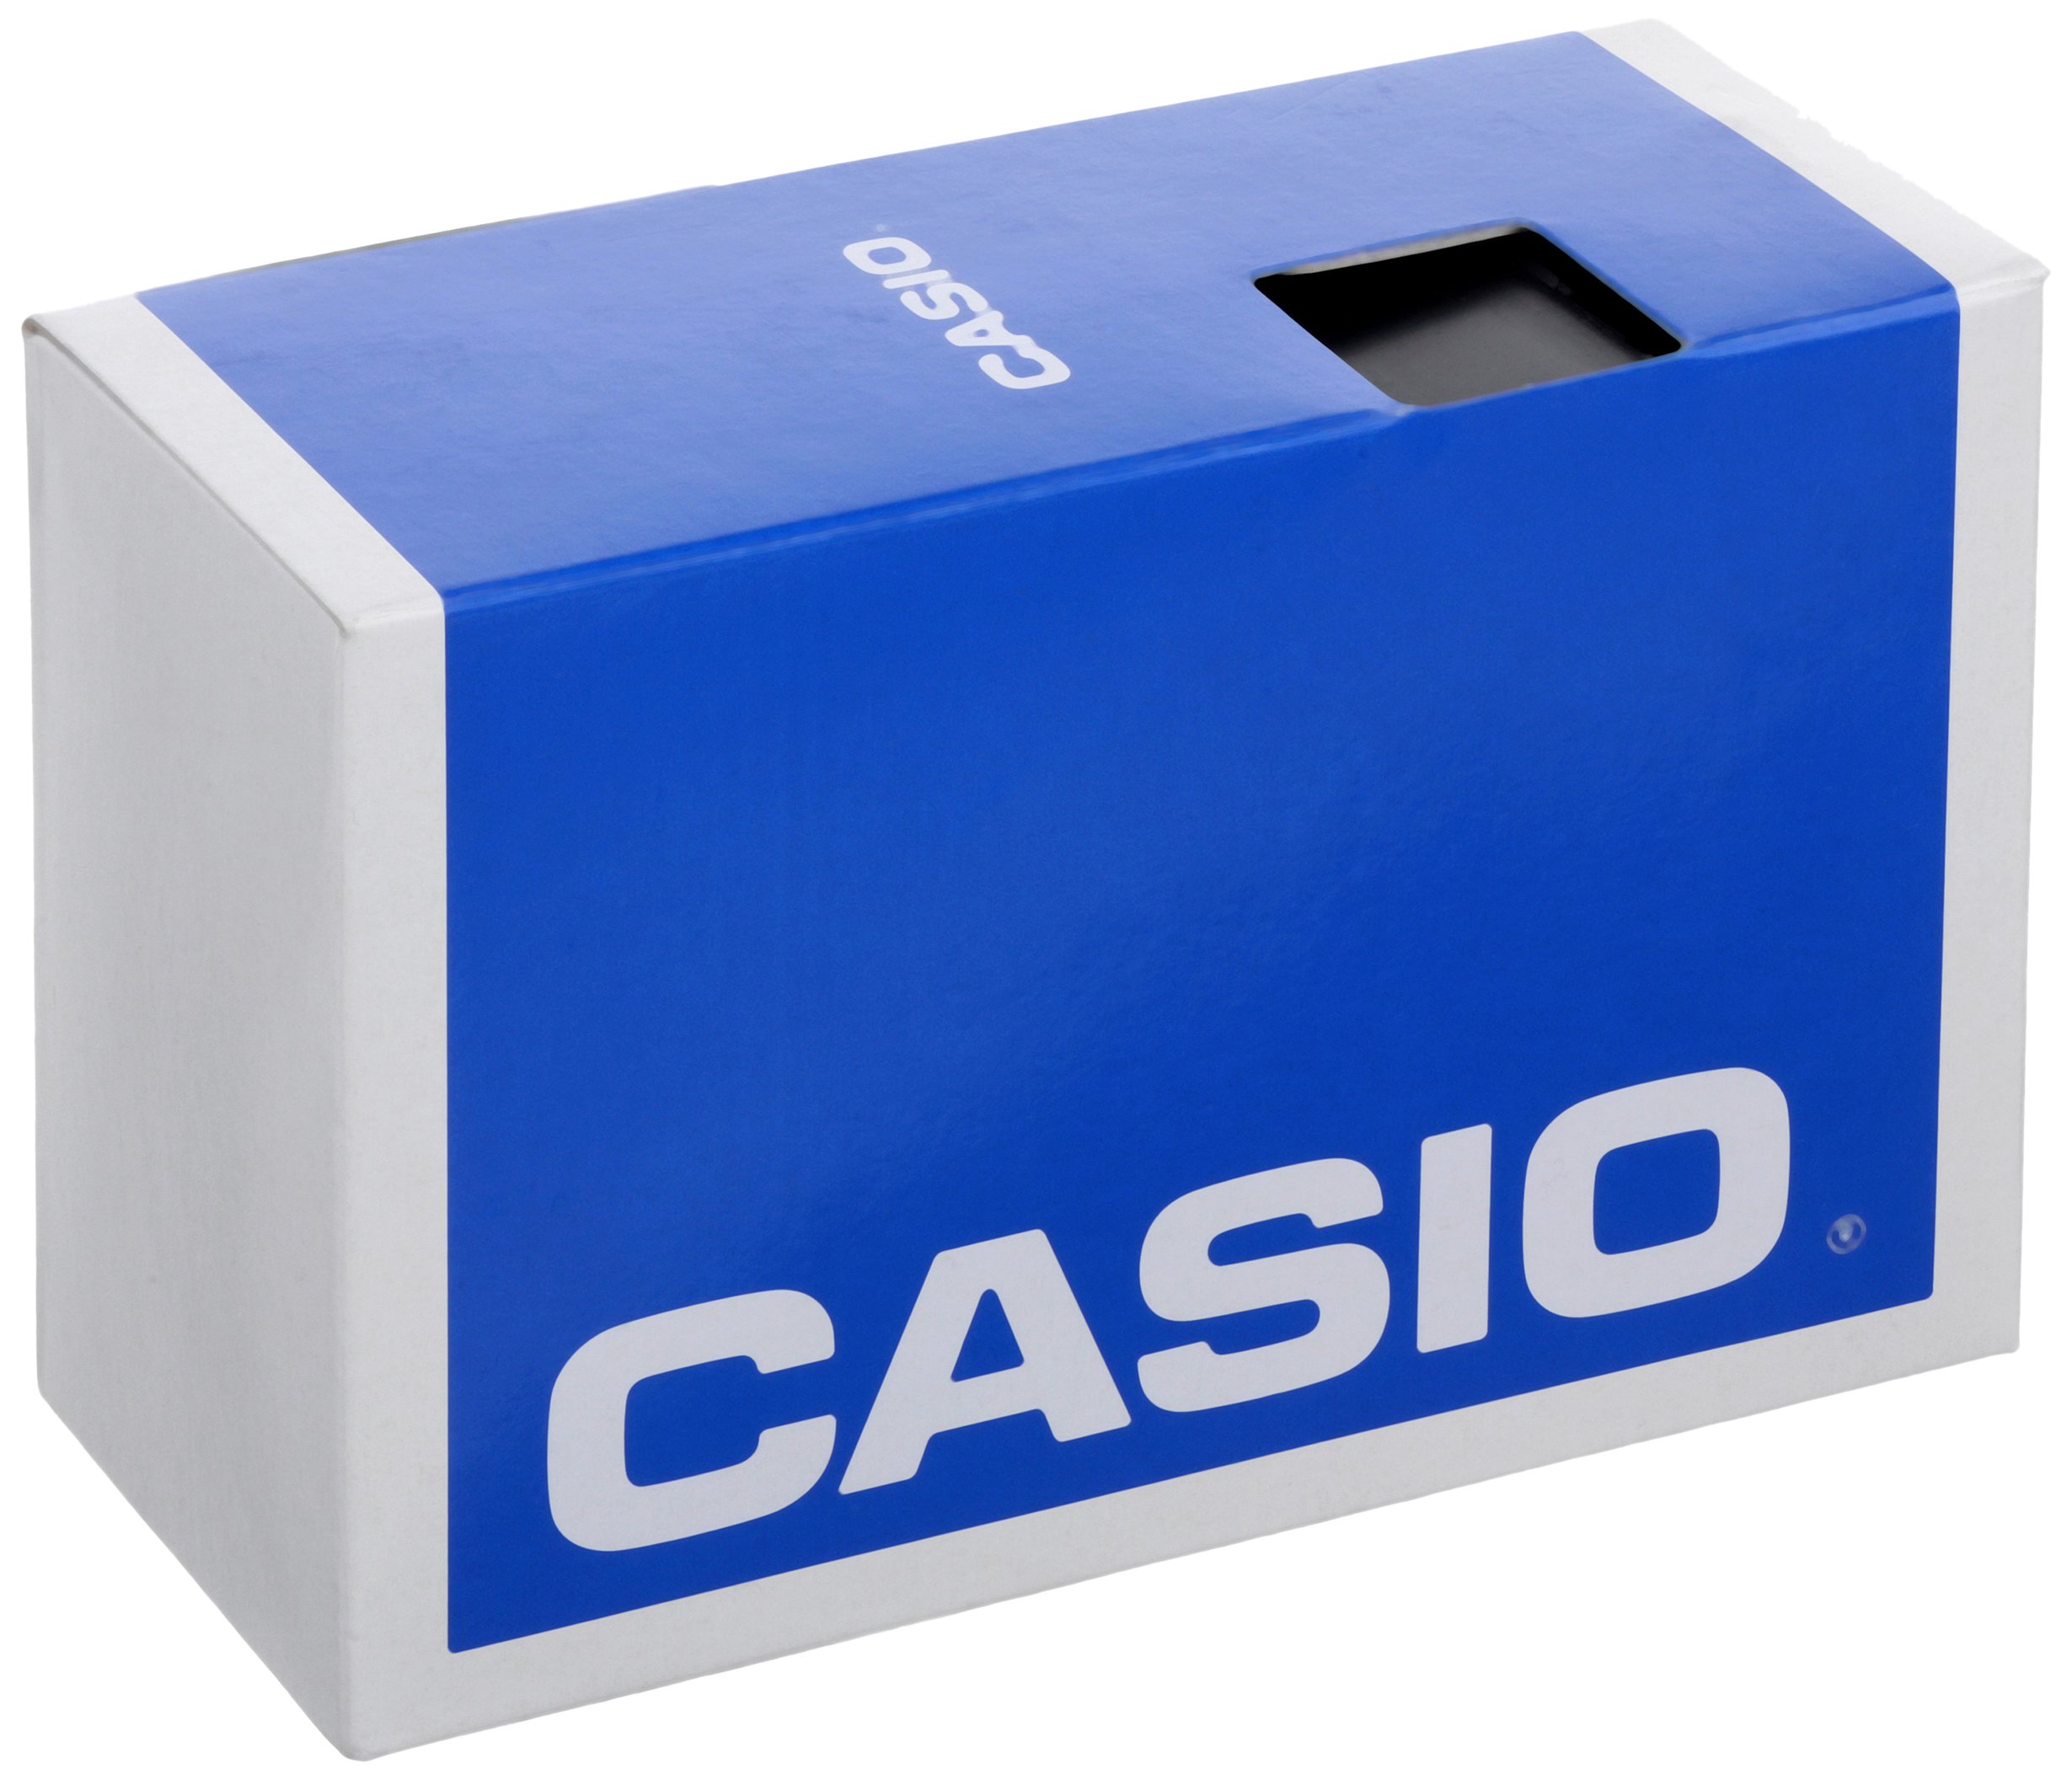 Casio Women's LWS- 1000H- 1AVCF Runner Series Digital Display Quartz Black/Green Watch